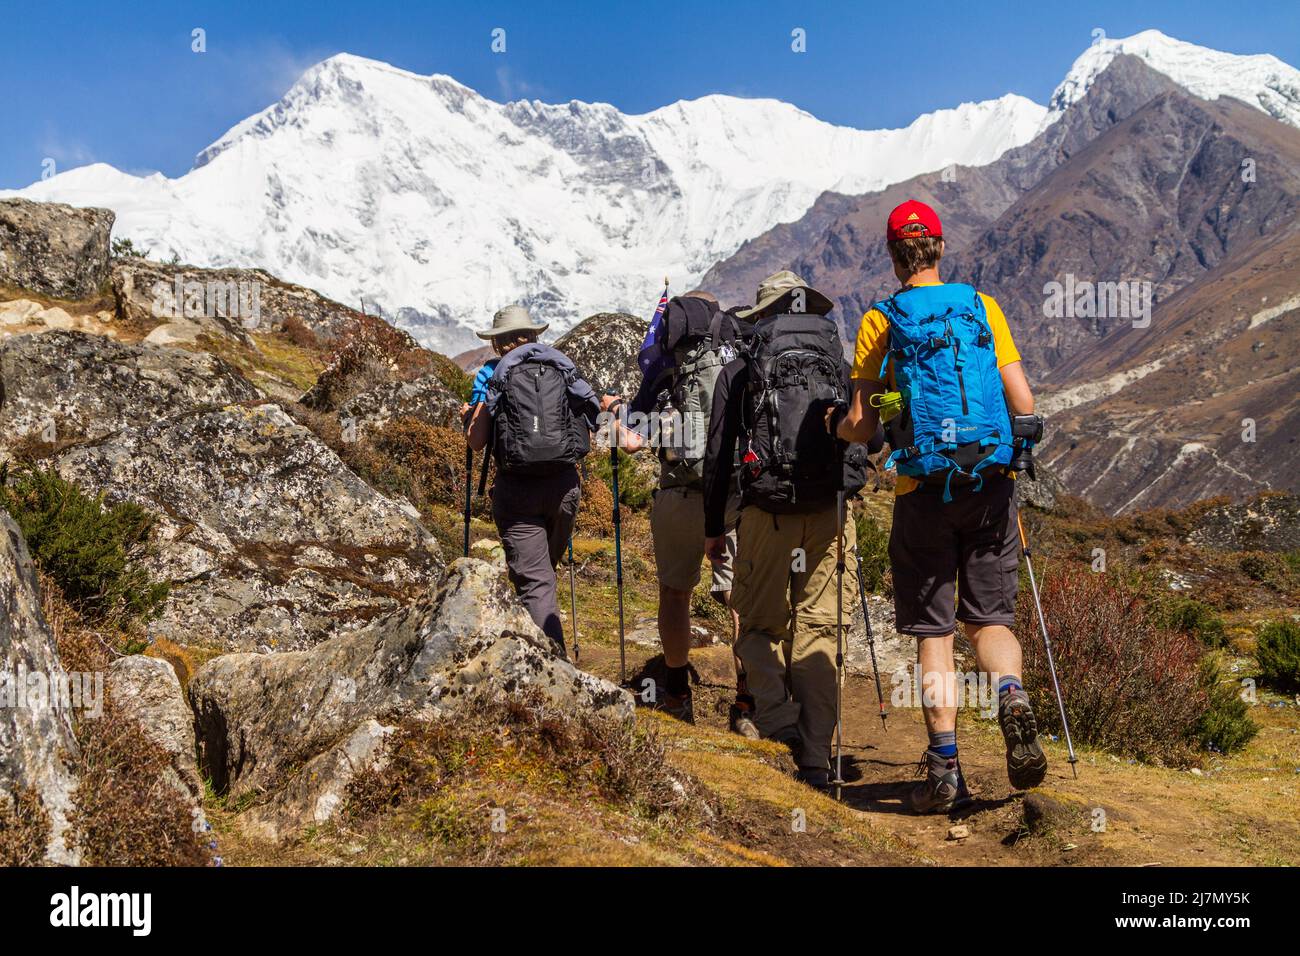 Men hiking on mountain - Nepal Stock Photo